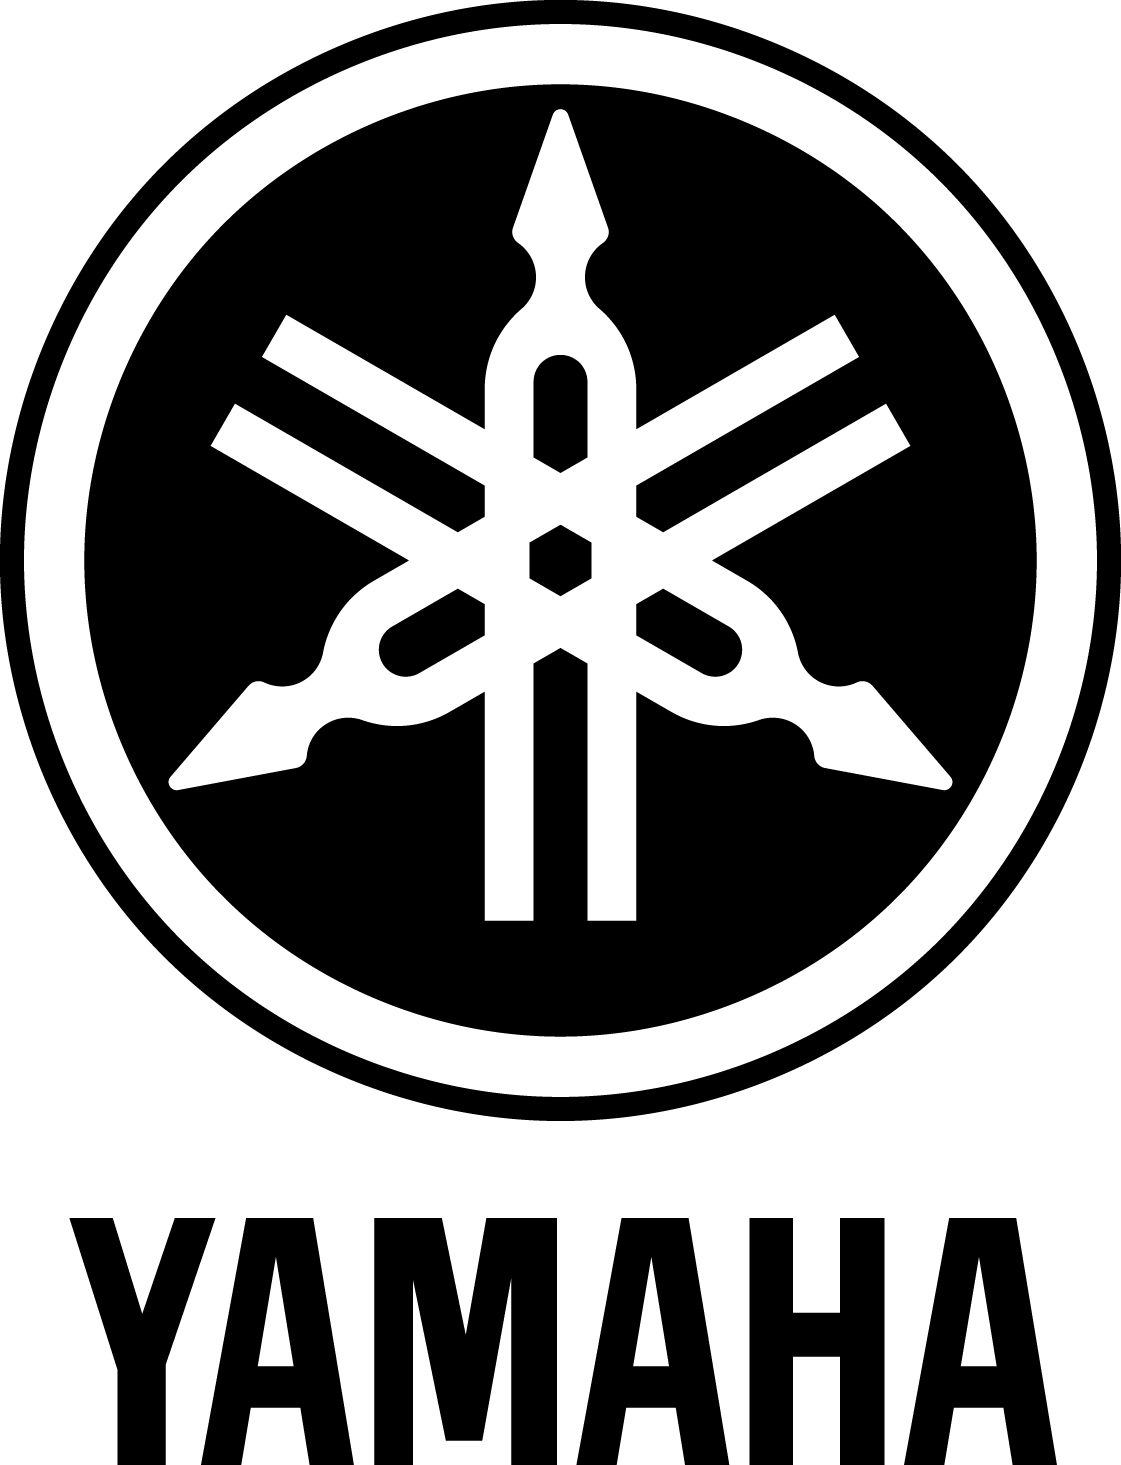 Yamaha logo .jpg